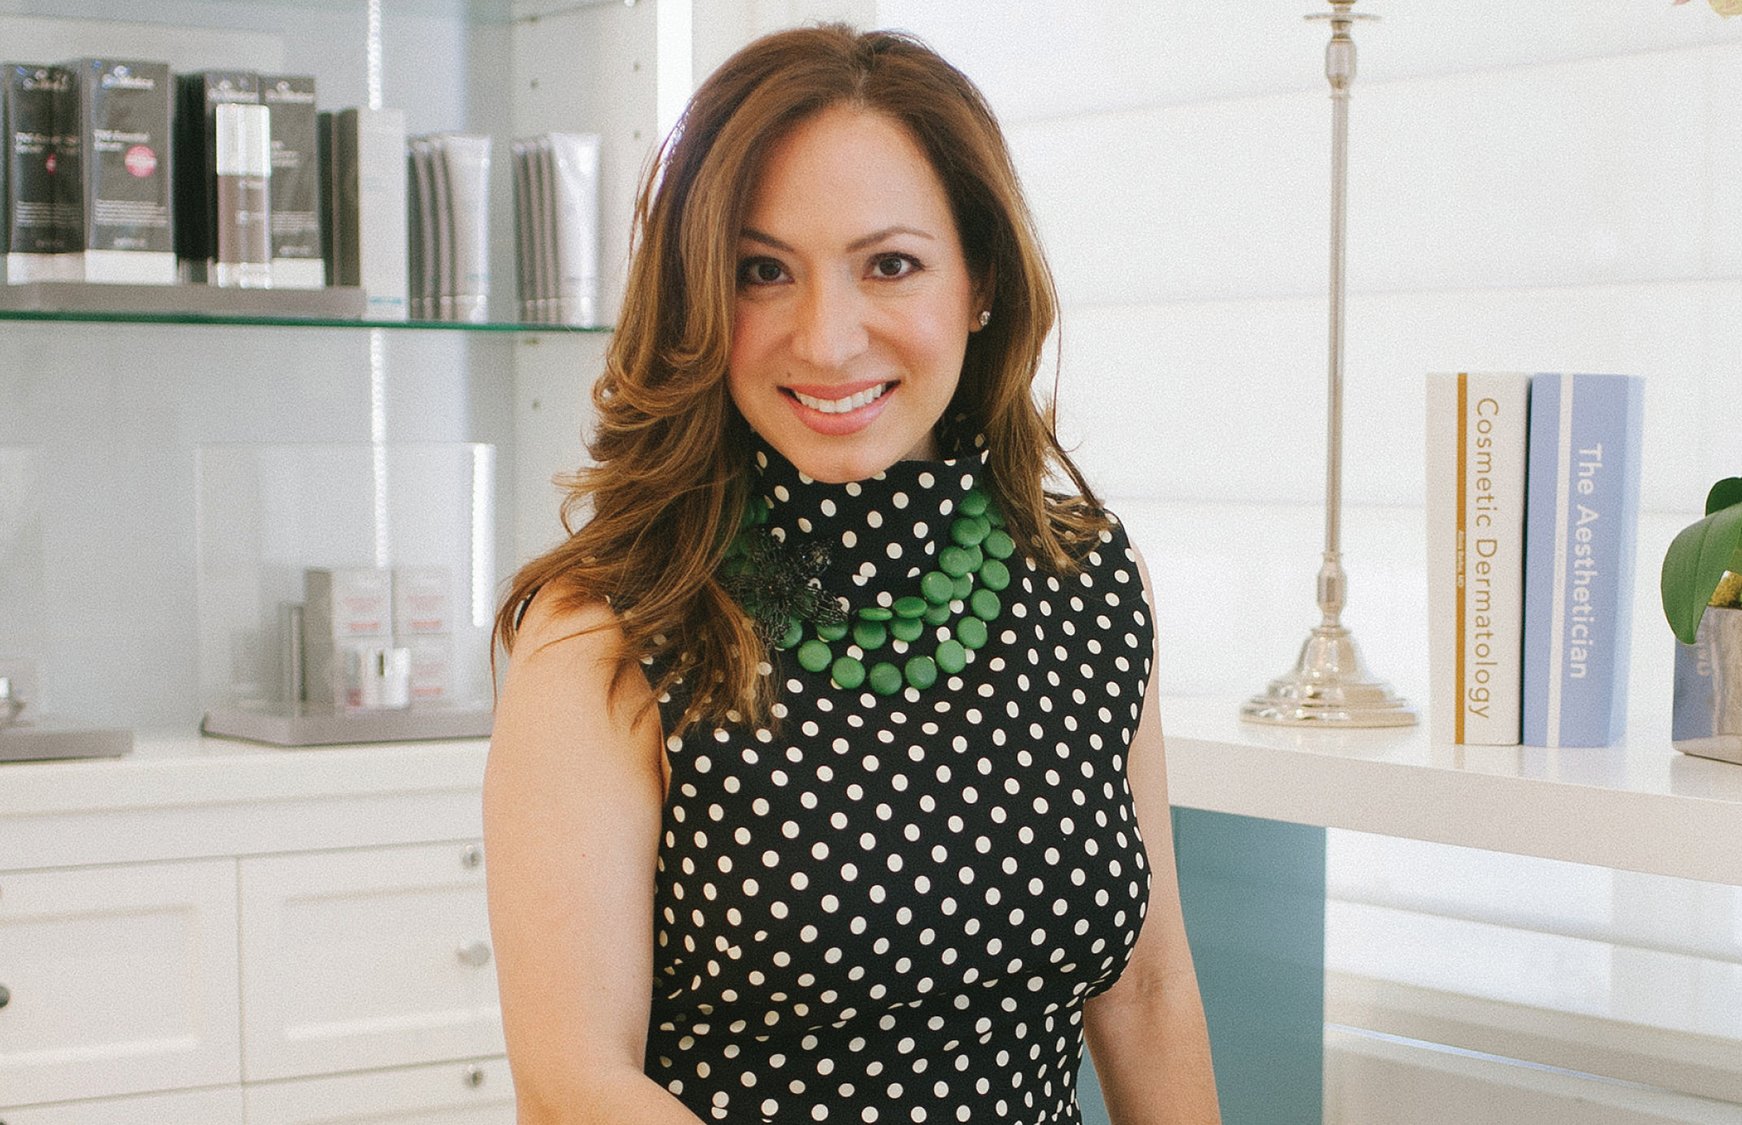 Miami Dermatologist, Alicia Barba, on Her Path to Doctor and Entrepreneur Image